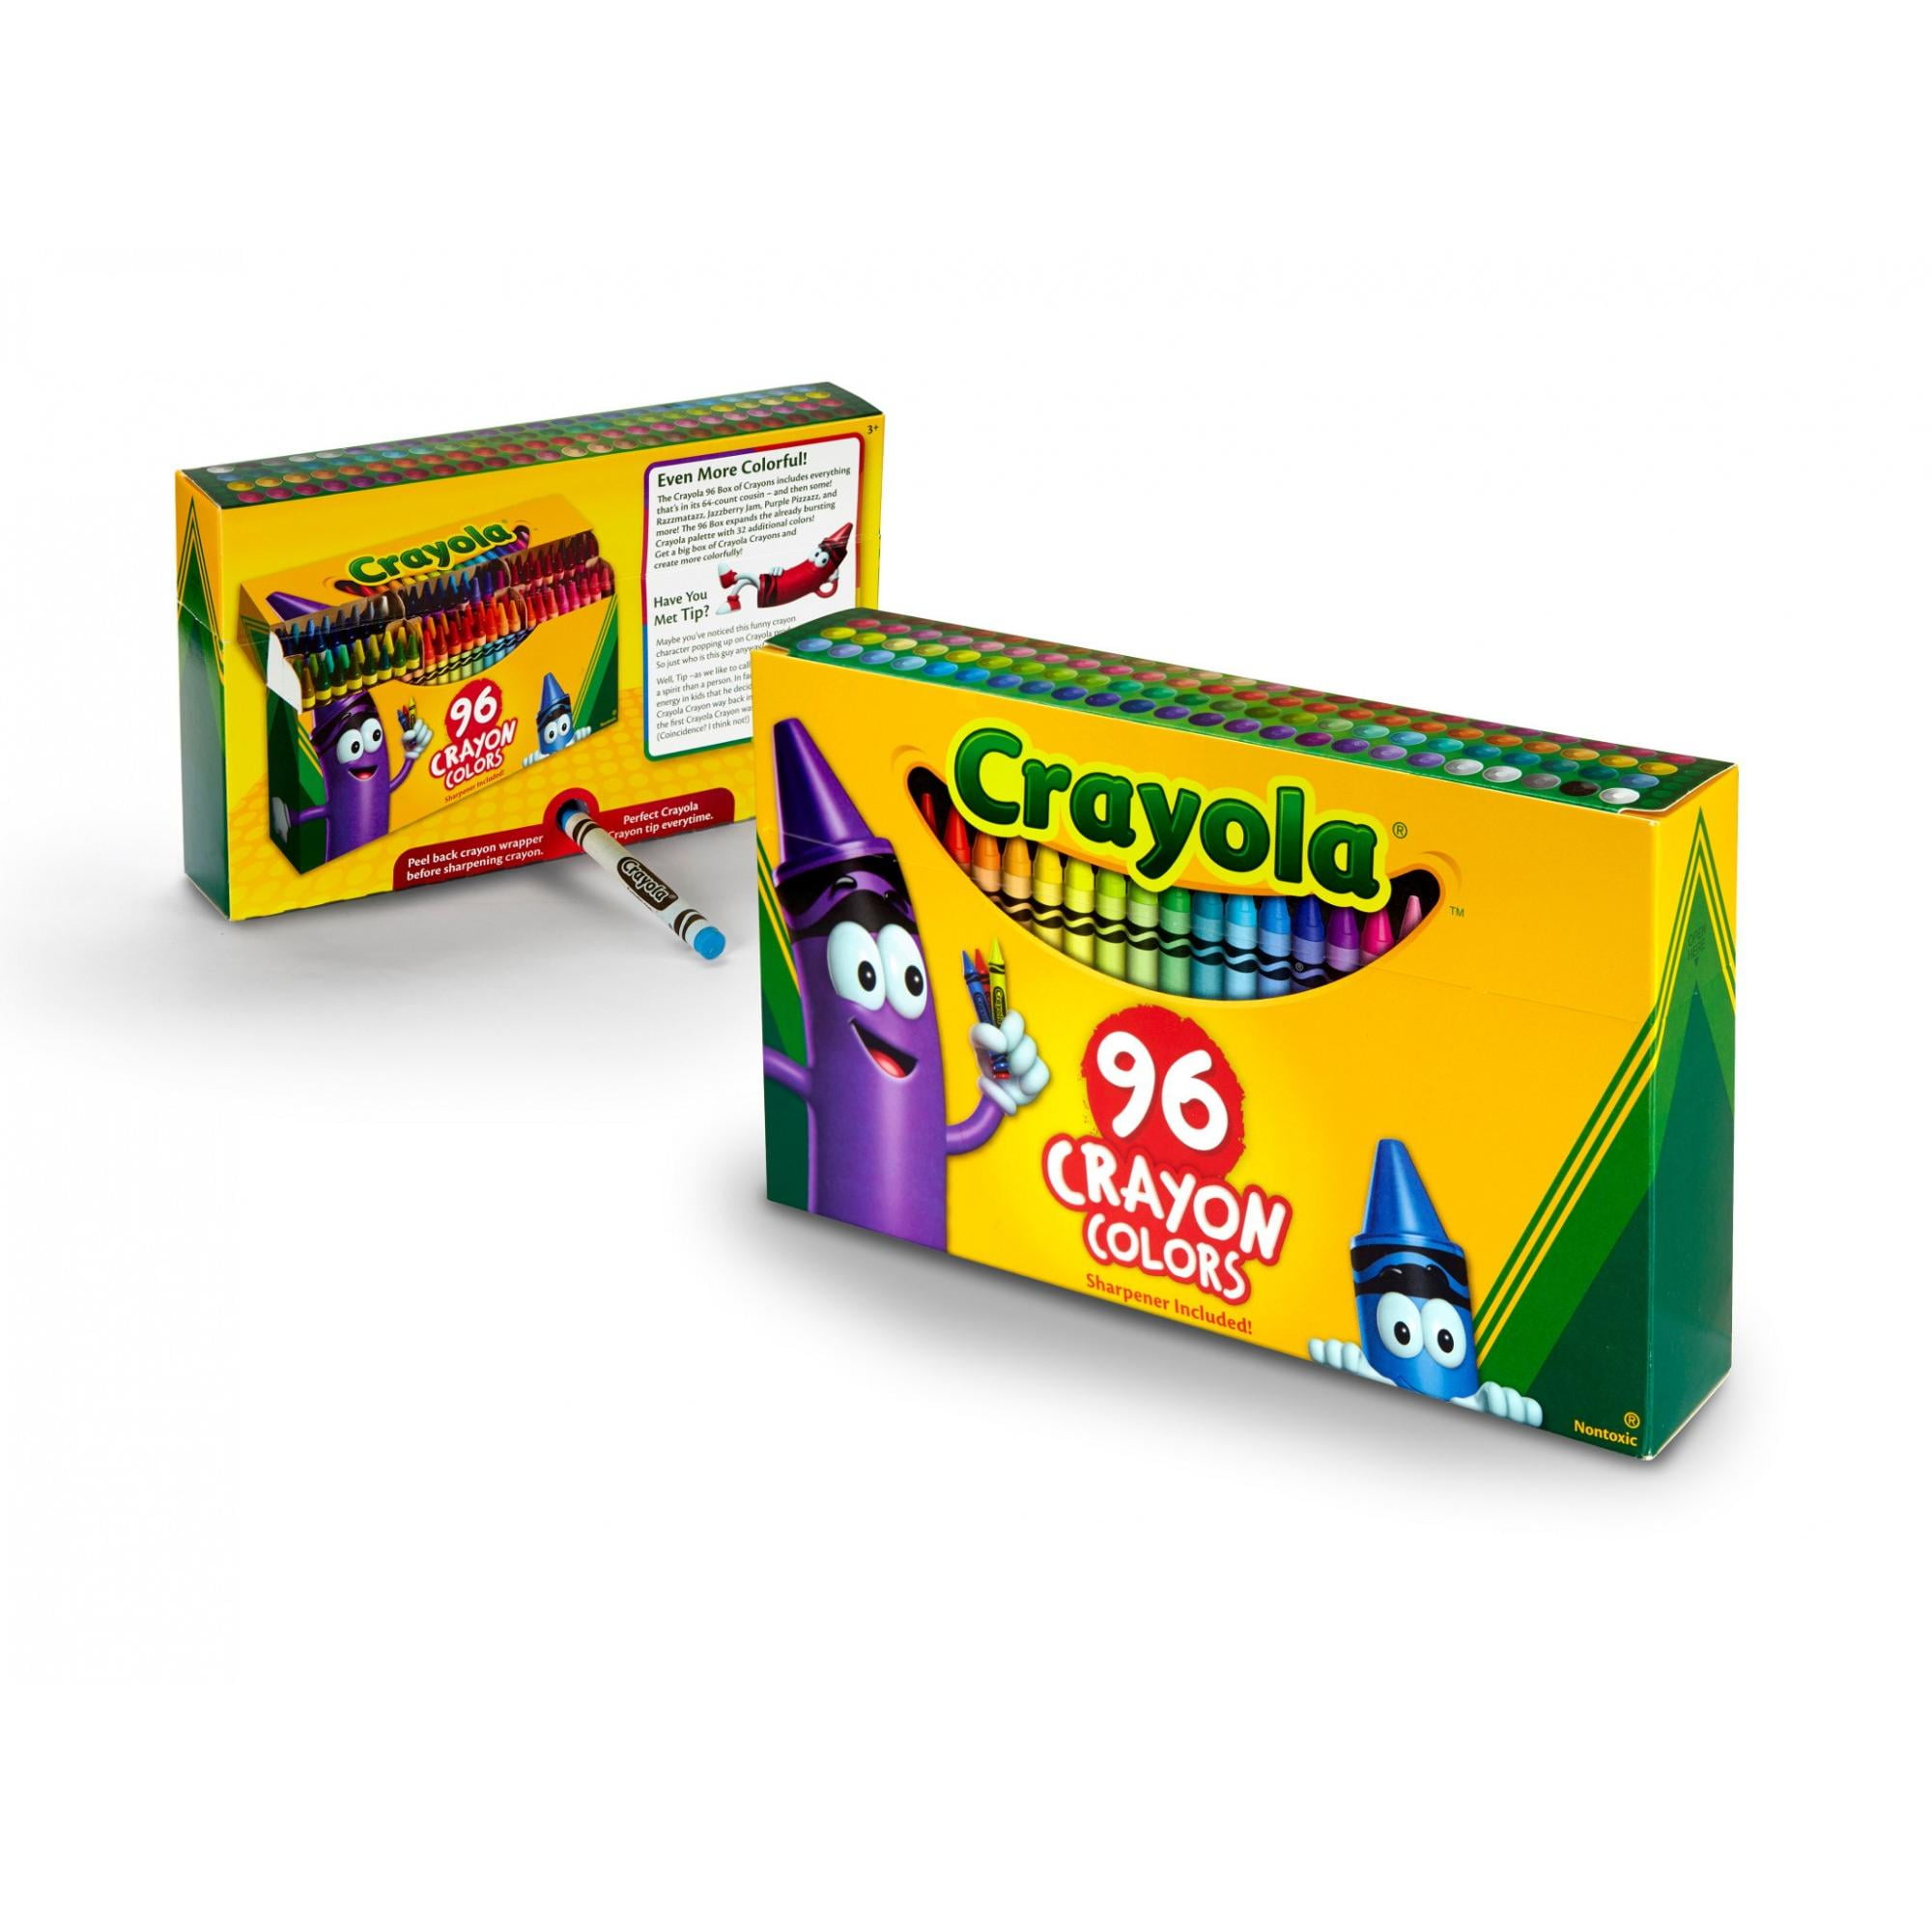 Download Crayola Crayon Set, 96 Pieces Coloring Set, Child Ages 3+ - Walmart.com - Walmart.com